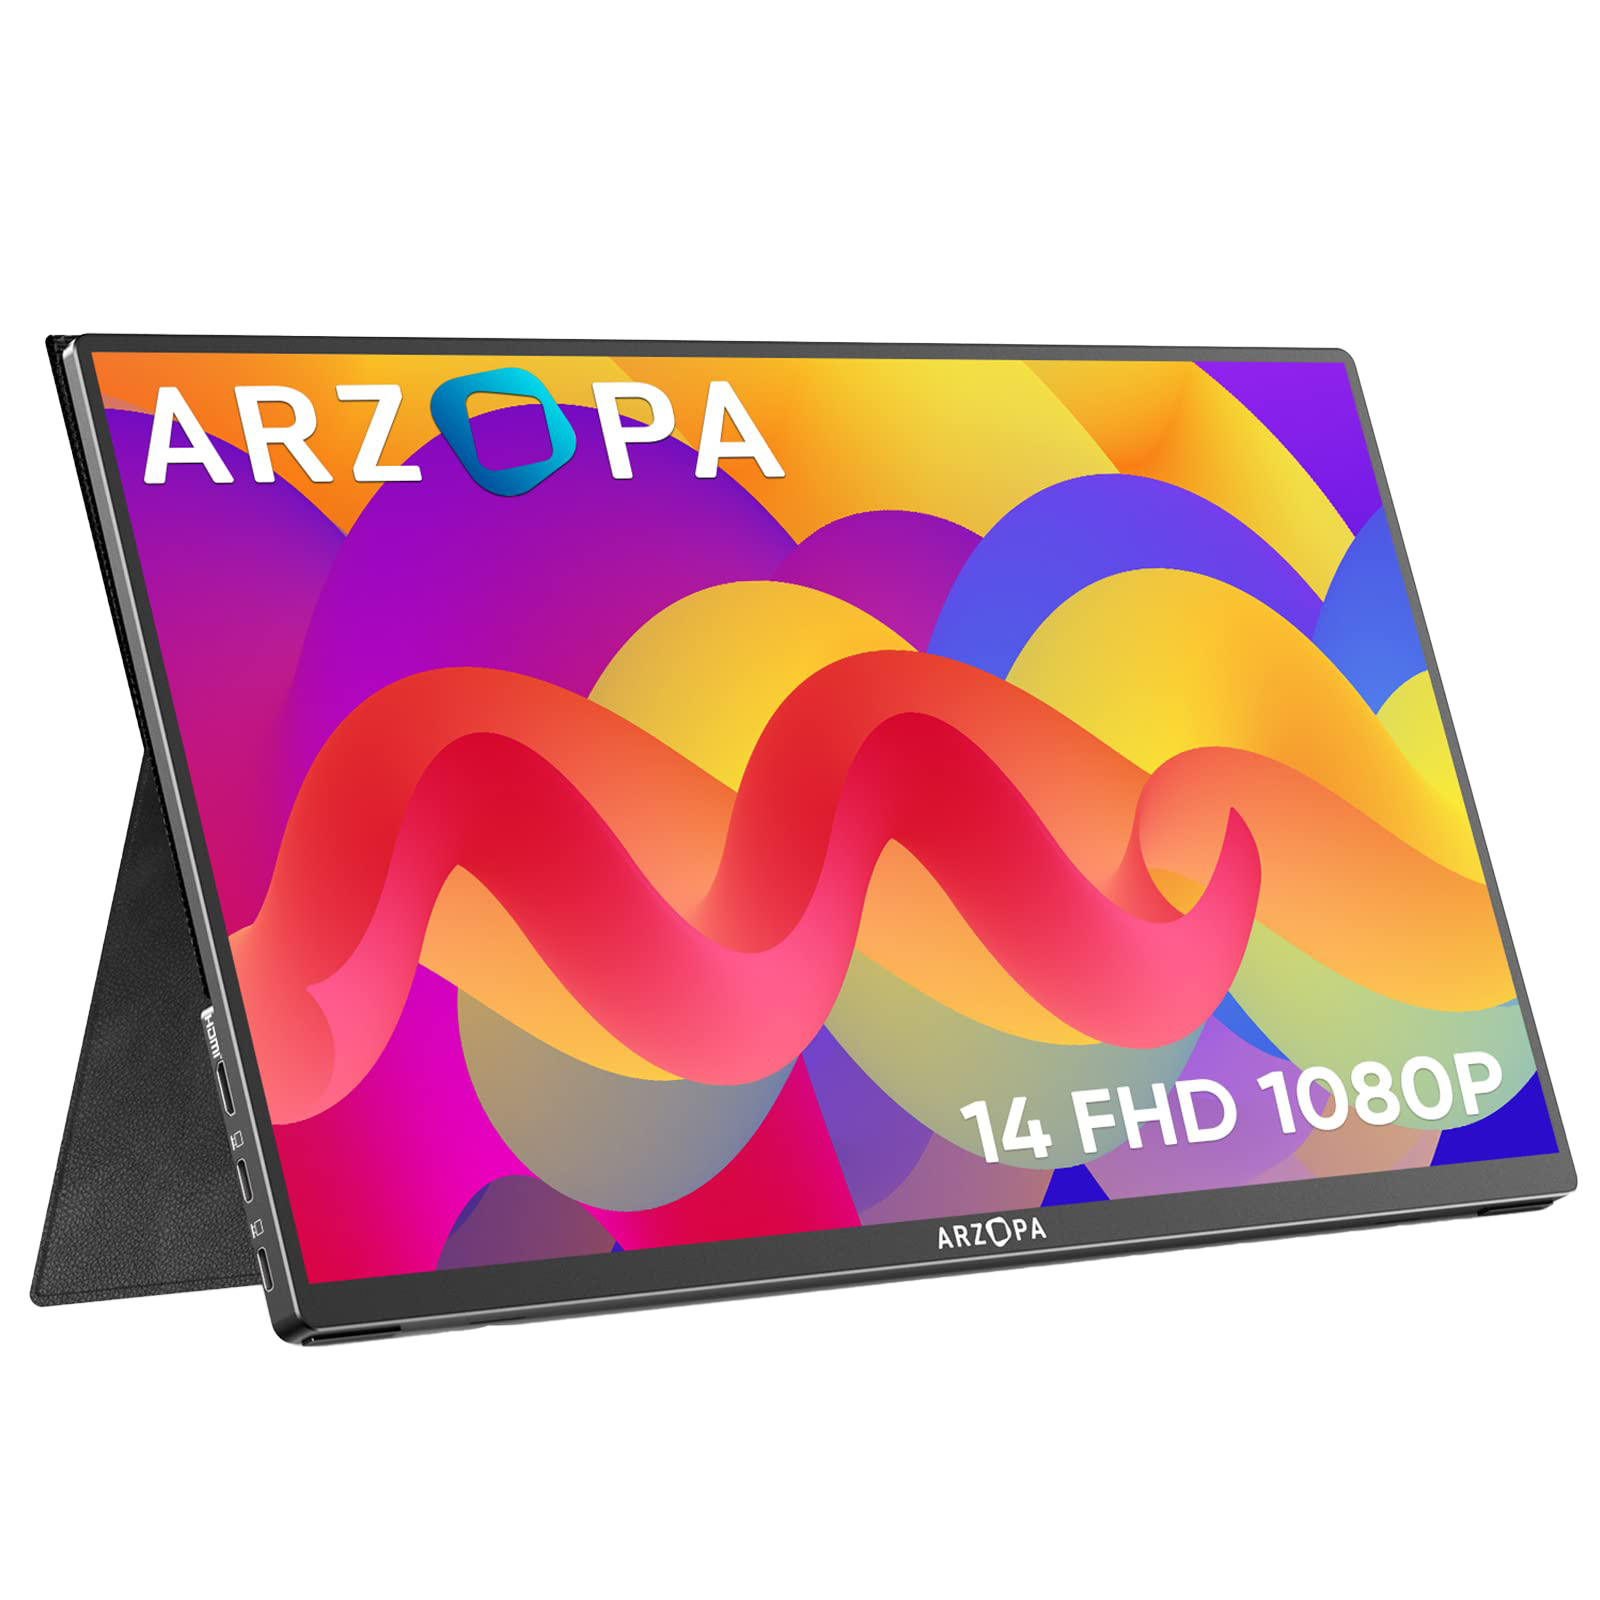 Arzopa 13.3 inch 1080p Portable Monitor